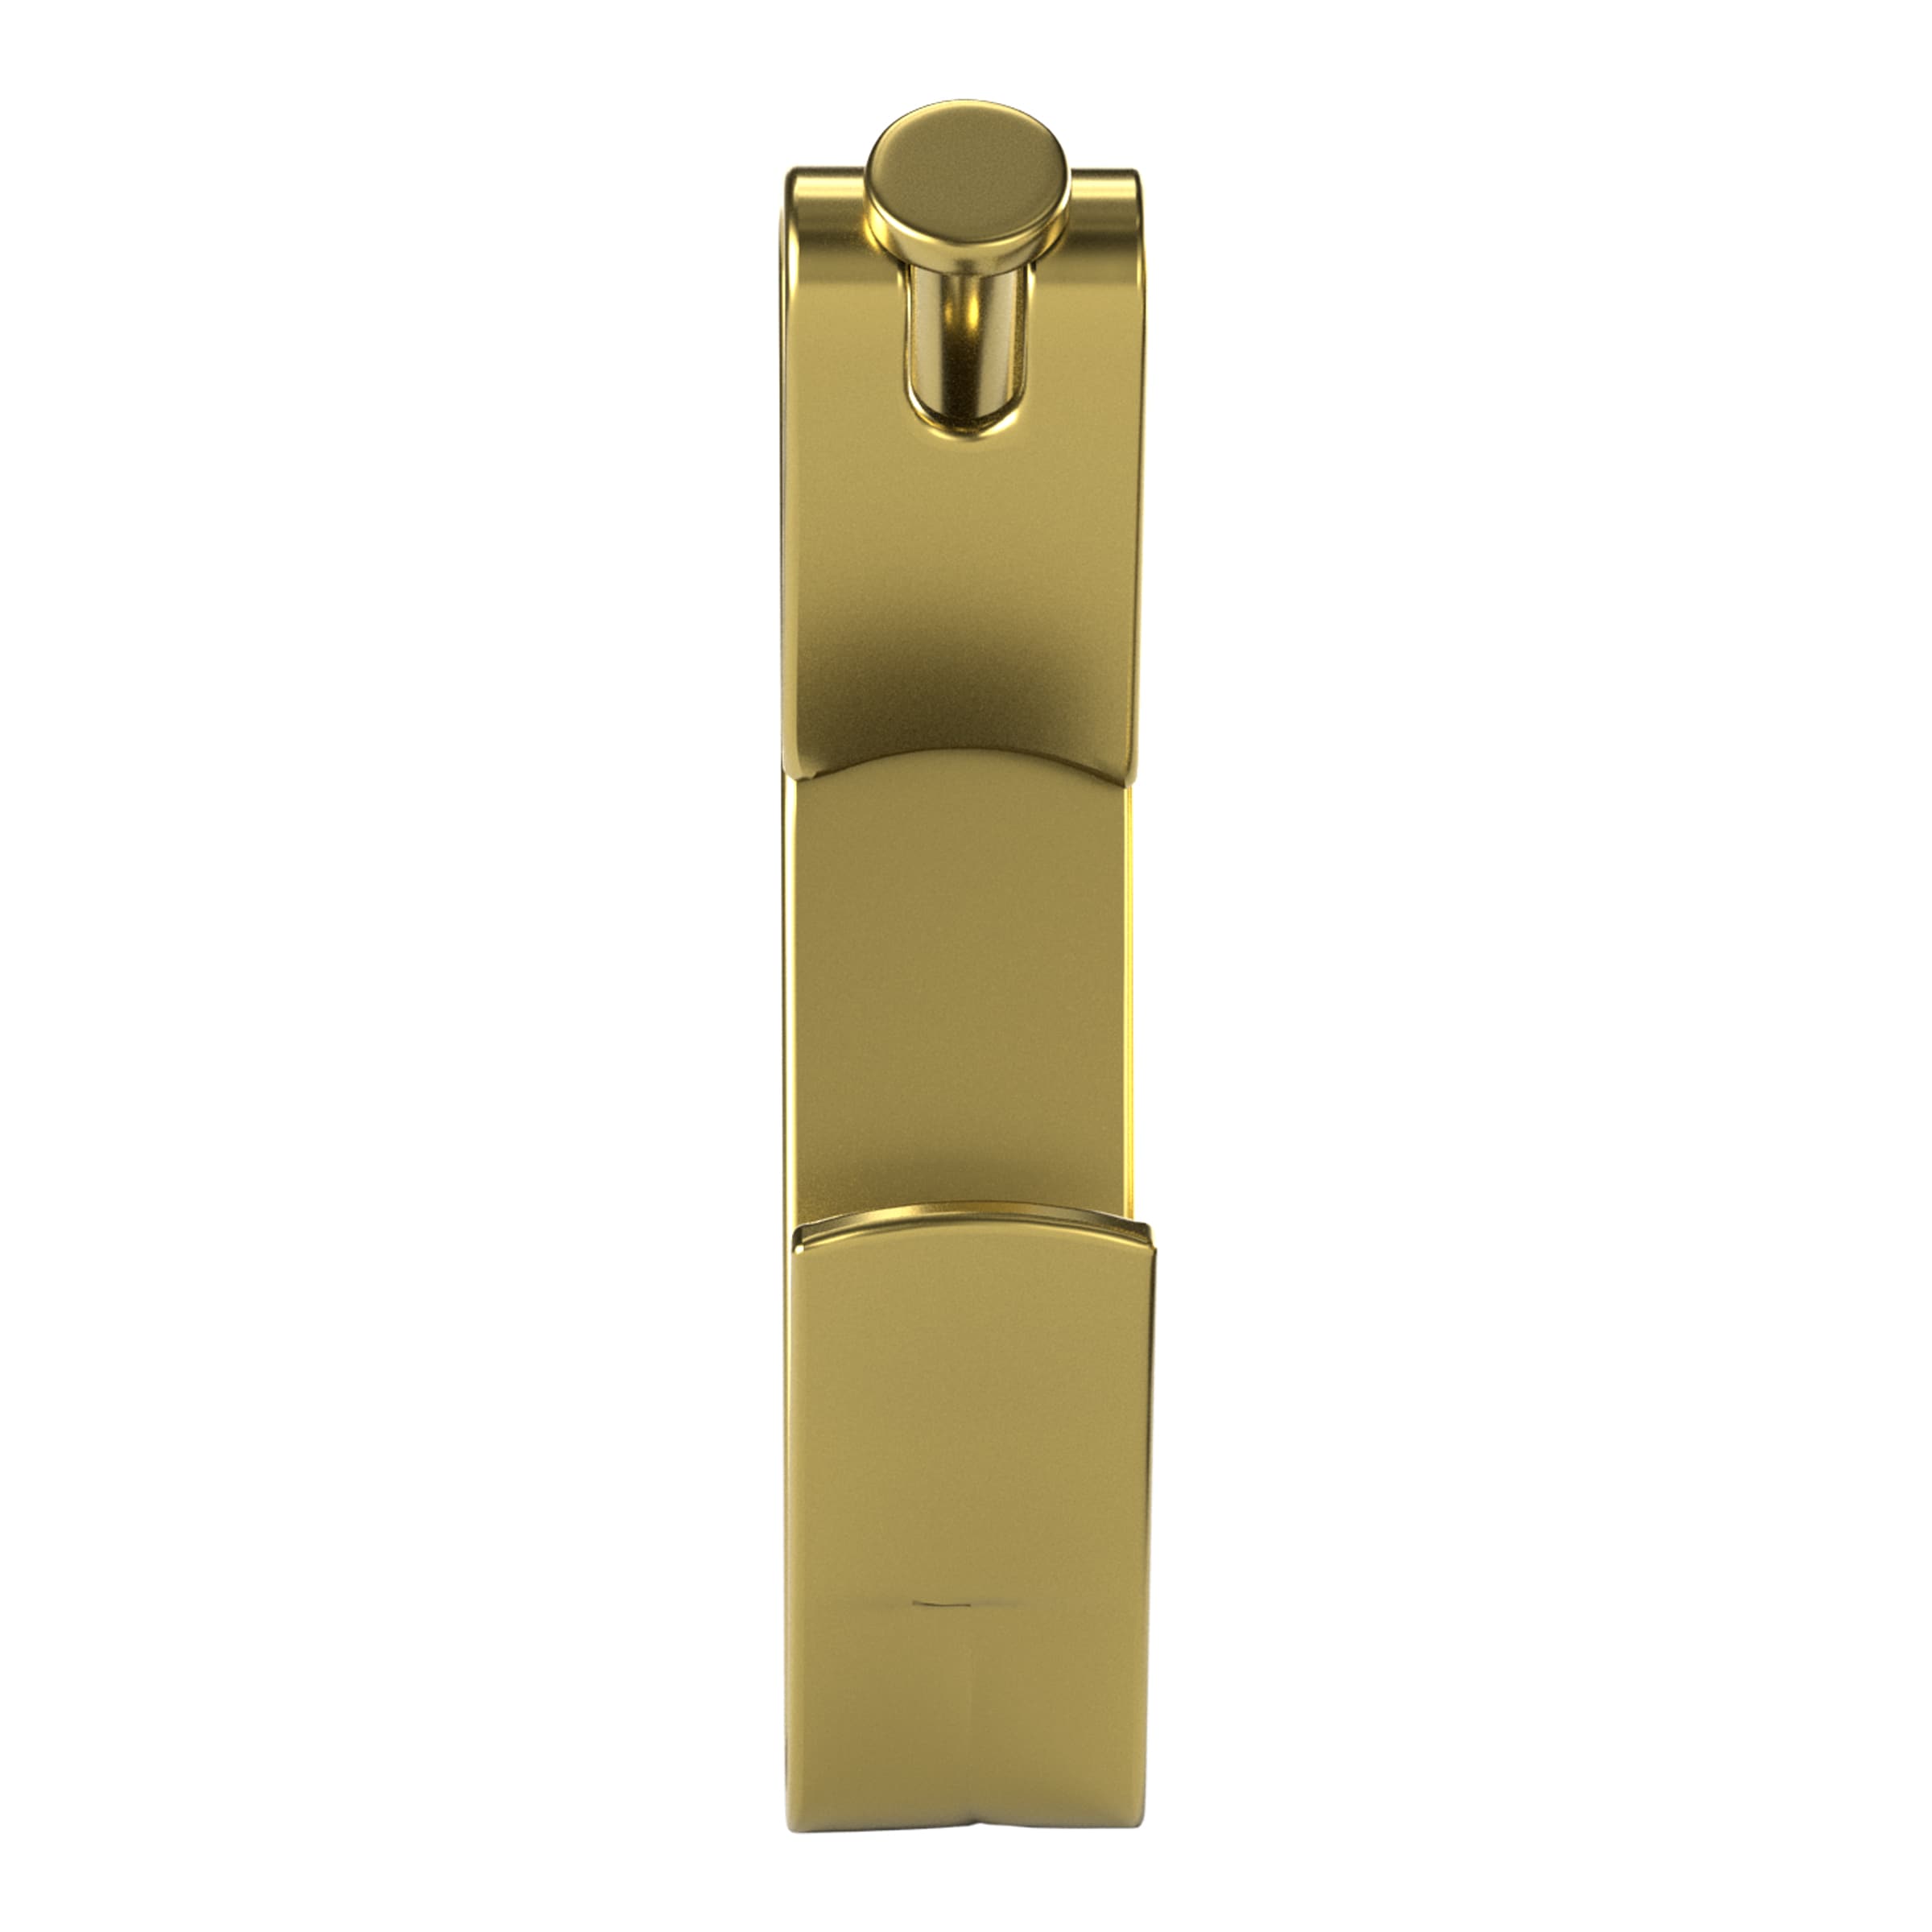 75lb Brass Plated Wall Hangers- The best Brass Picture Hanger Hooks